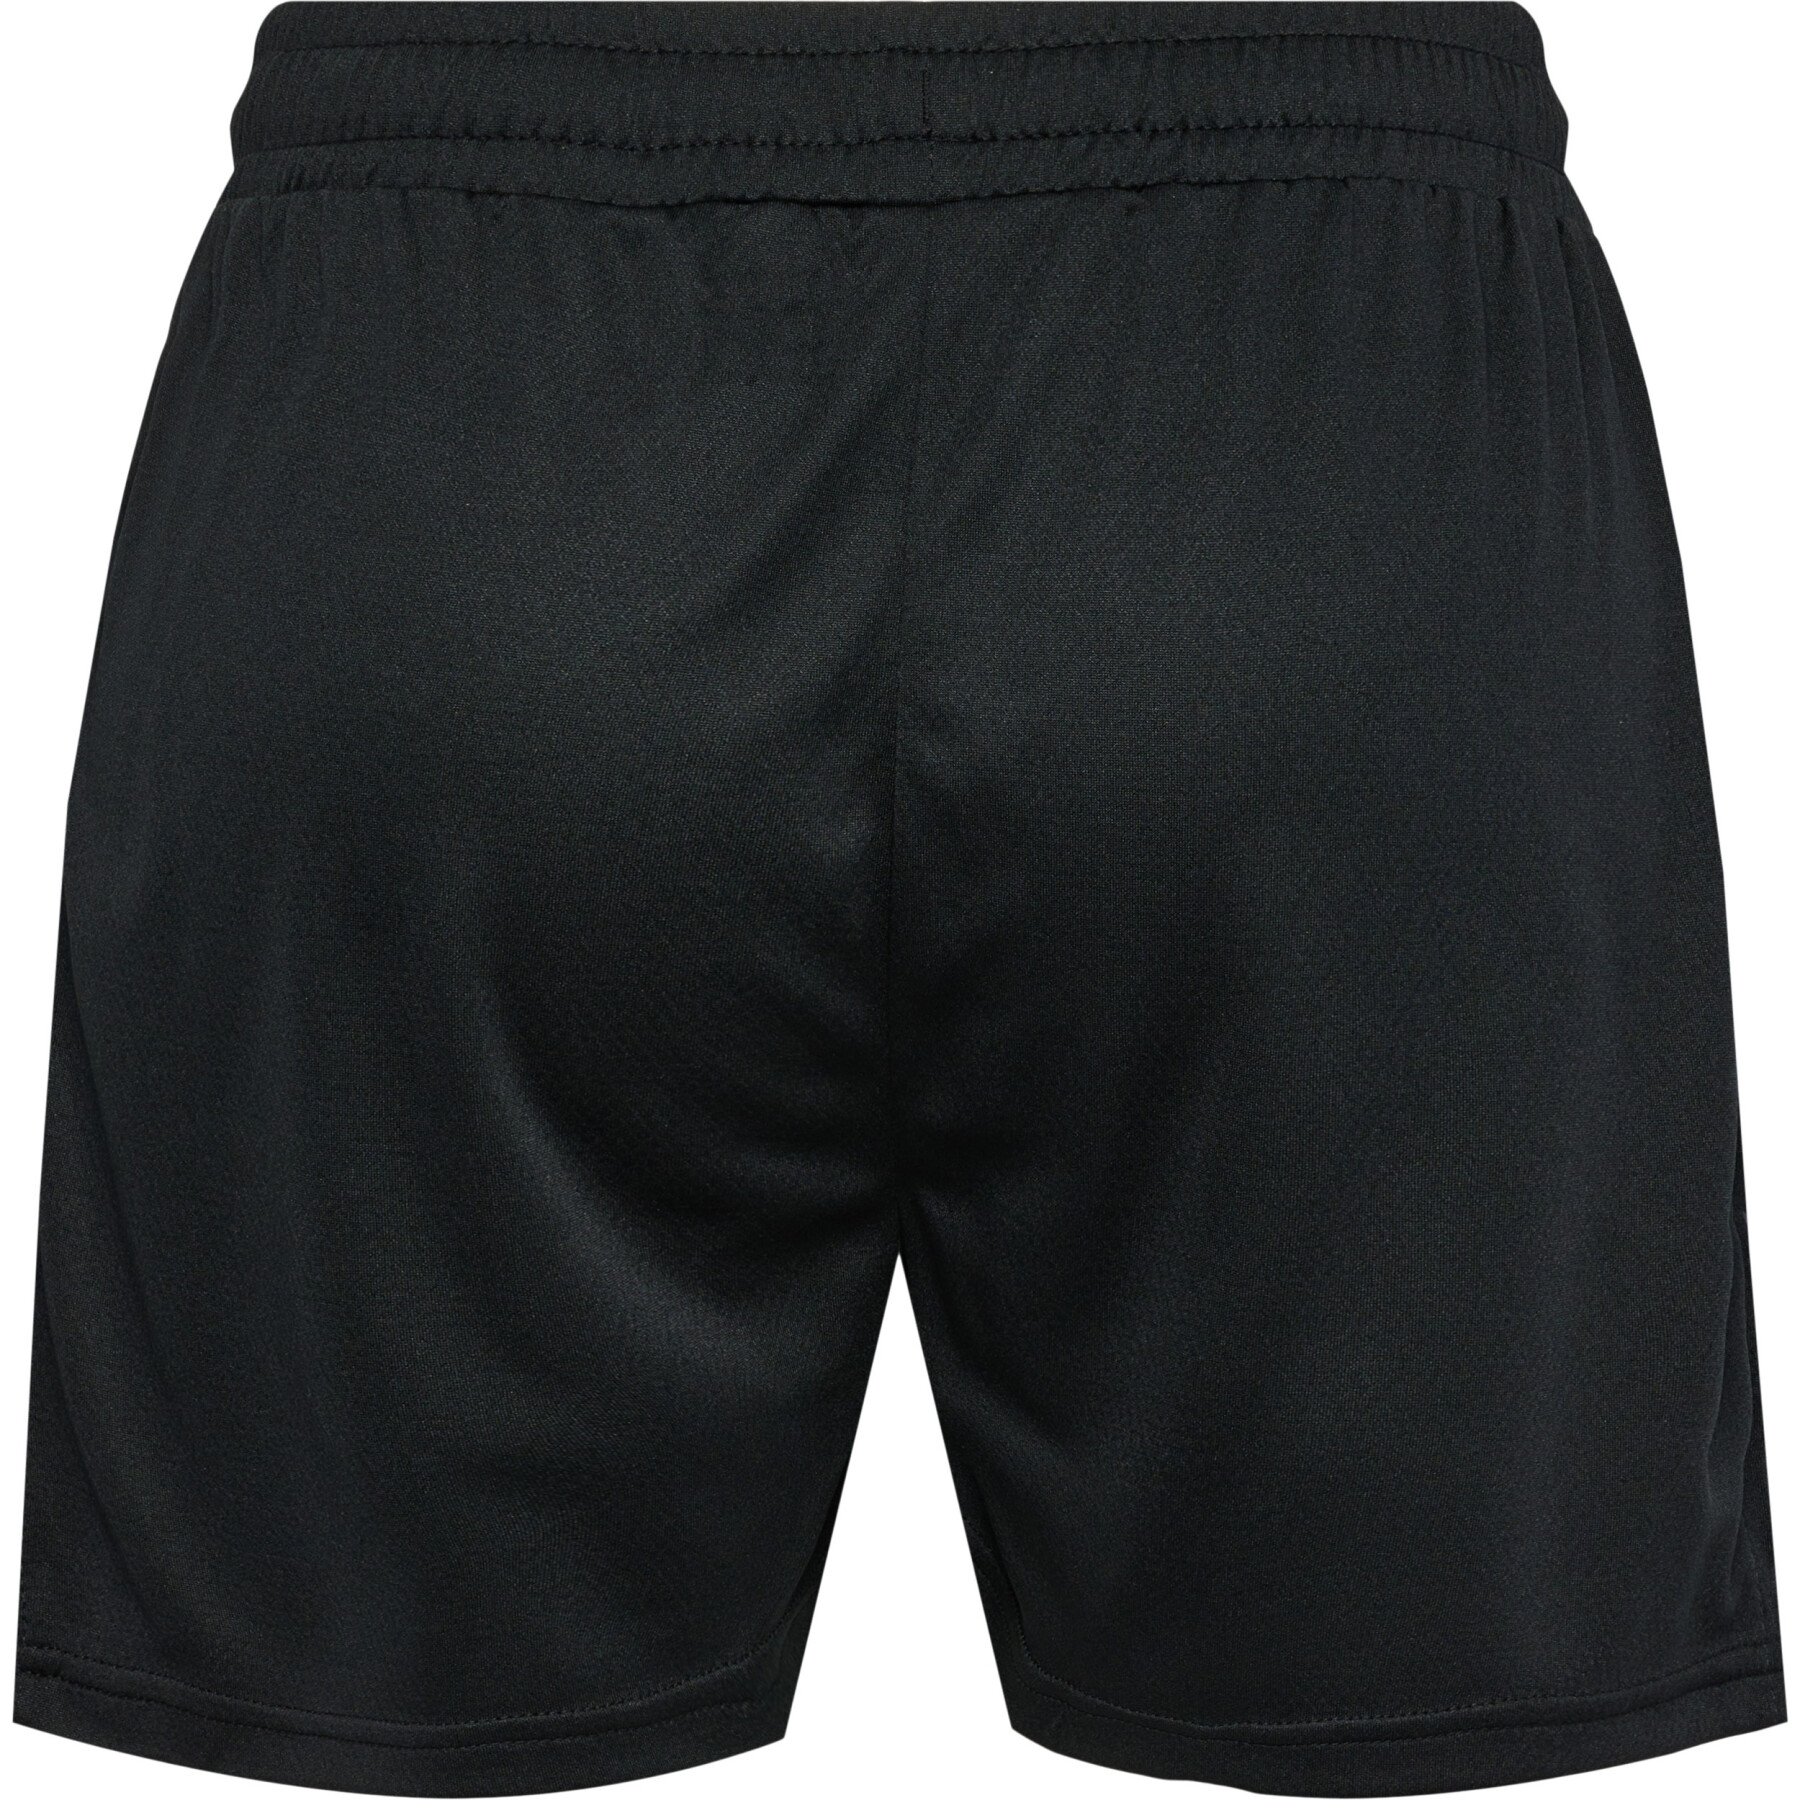 Women's shorts Hummel Active PL